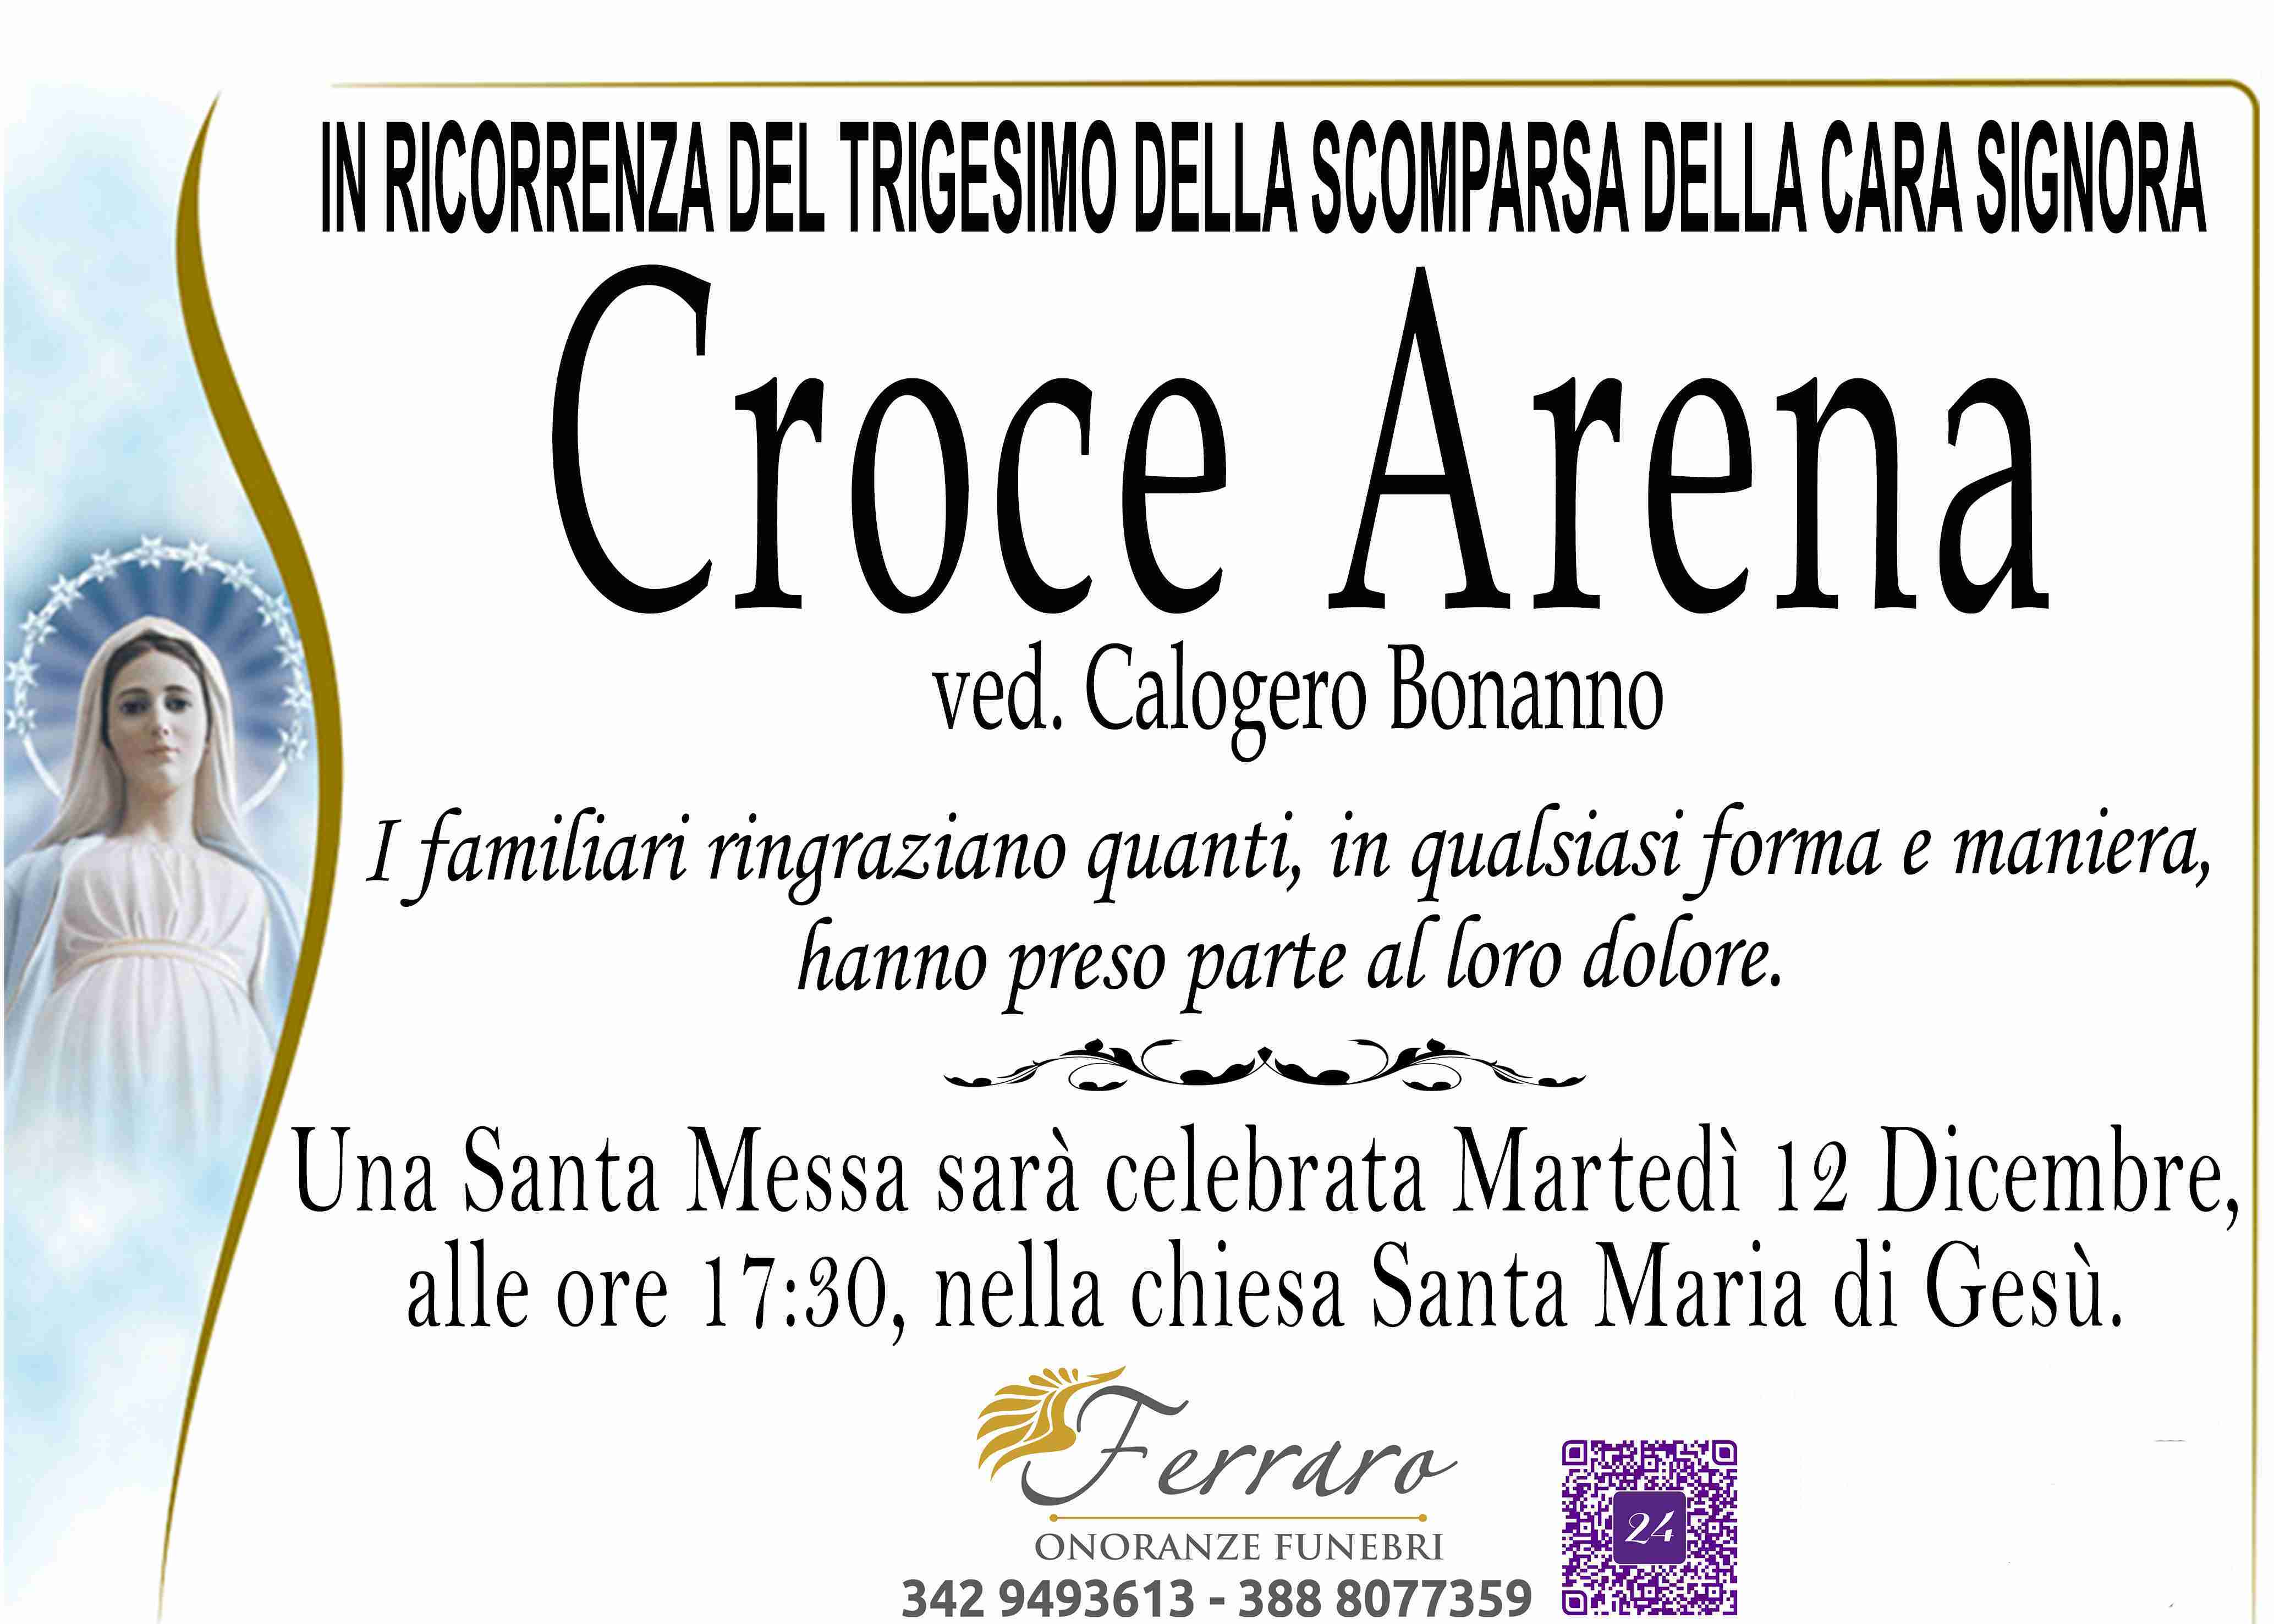 Croce Arena